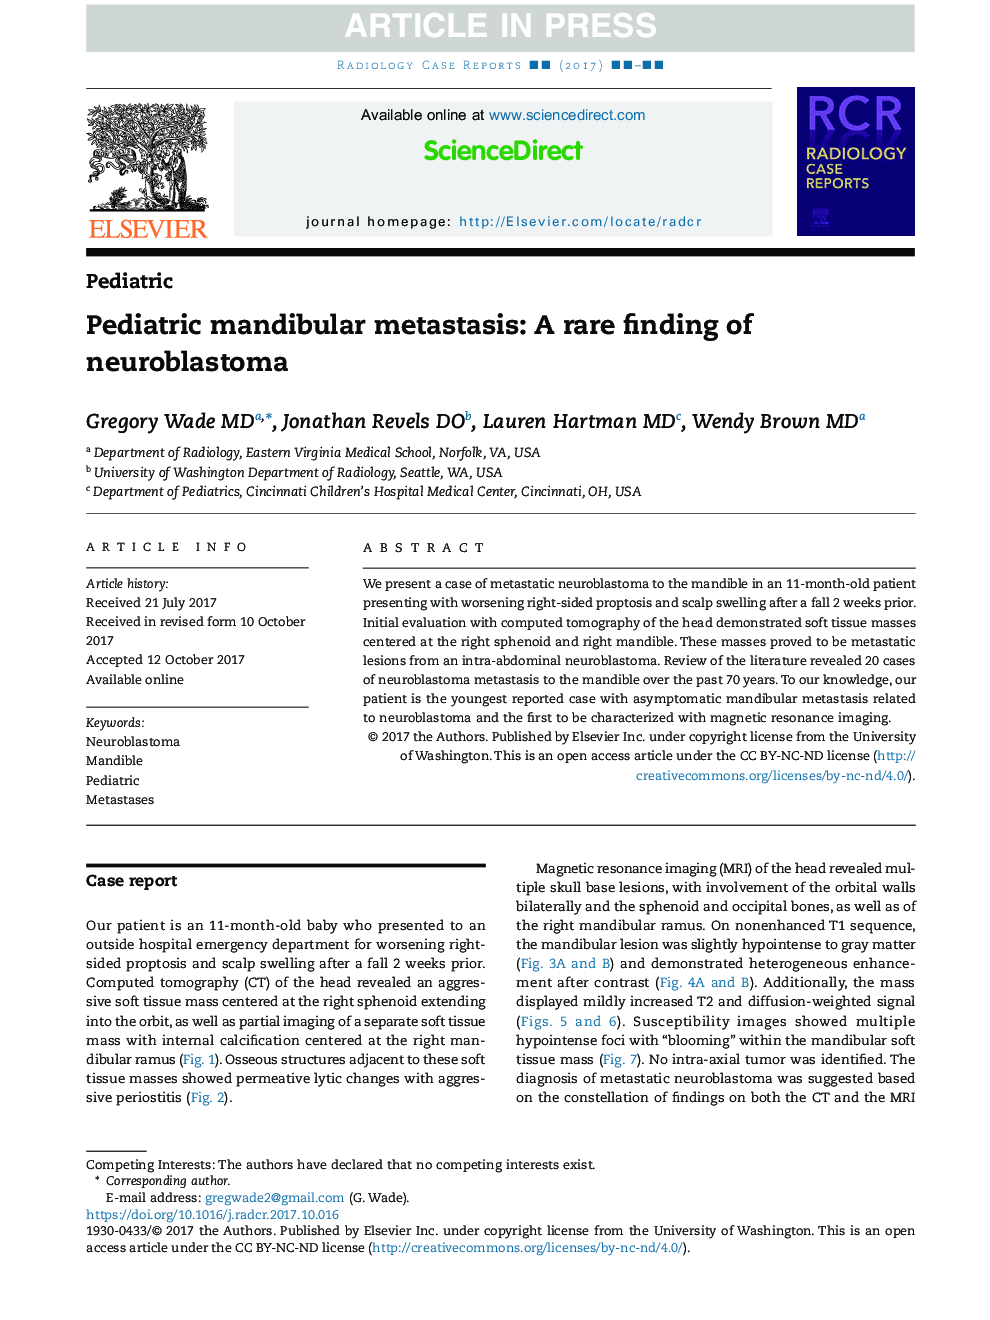 Pediatric mandibular metastasis: A rare finding of neuroblastoma